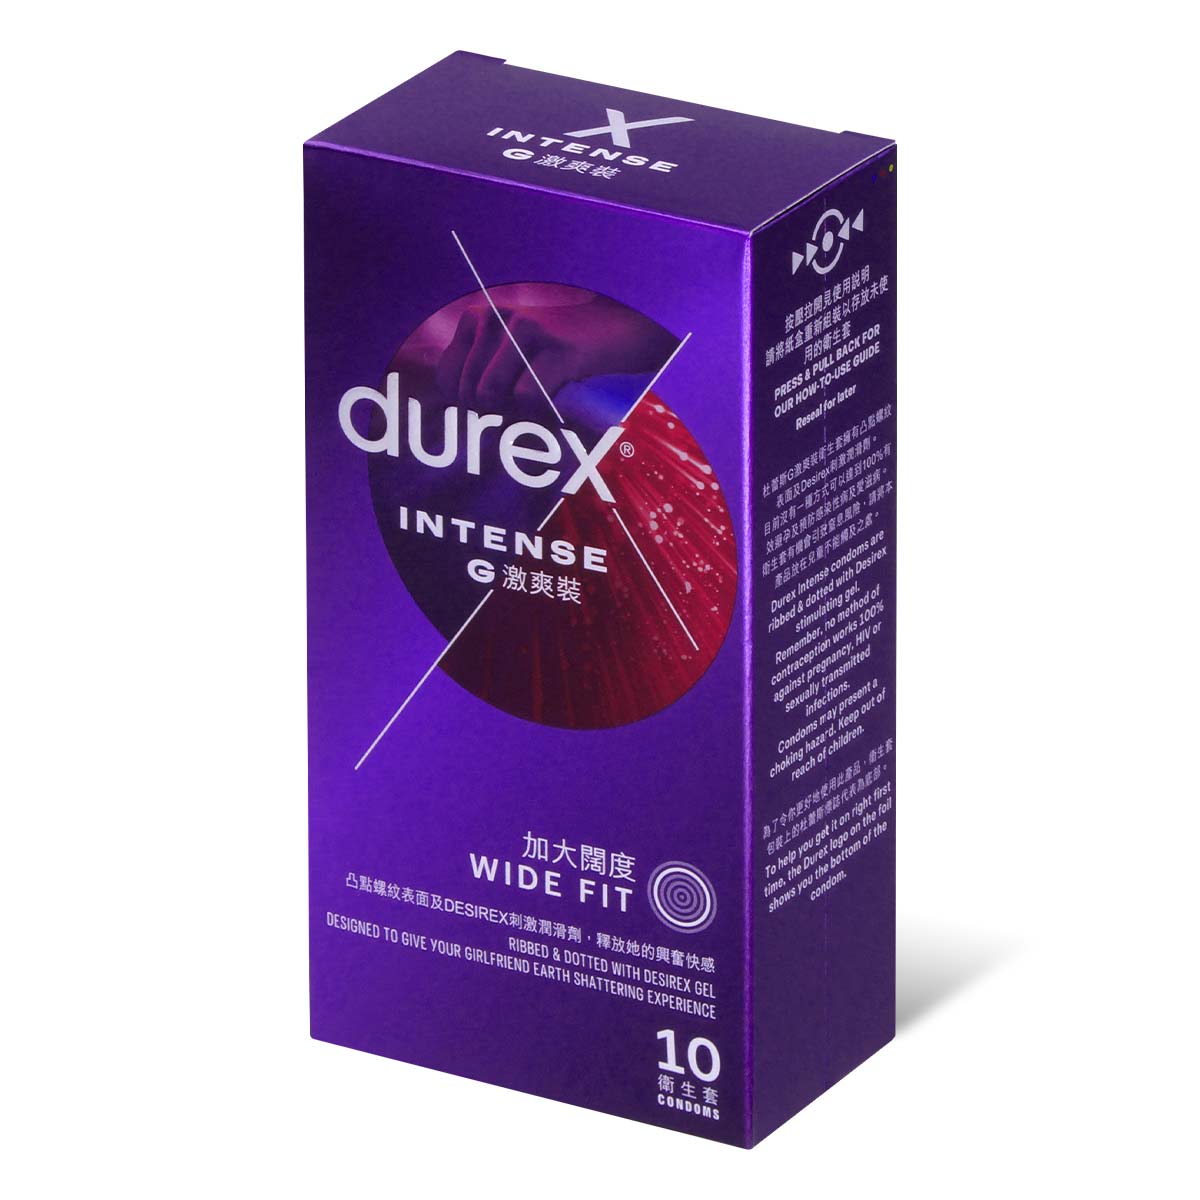 Durex Intense Orgasmic Condoms 10's Pack Latex Condom (New or old packaging will be sent randomly)-p_1